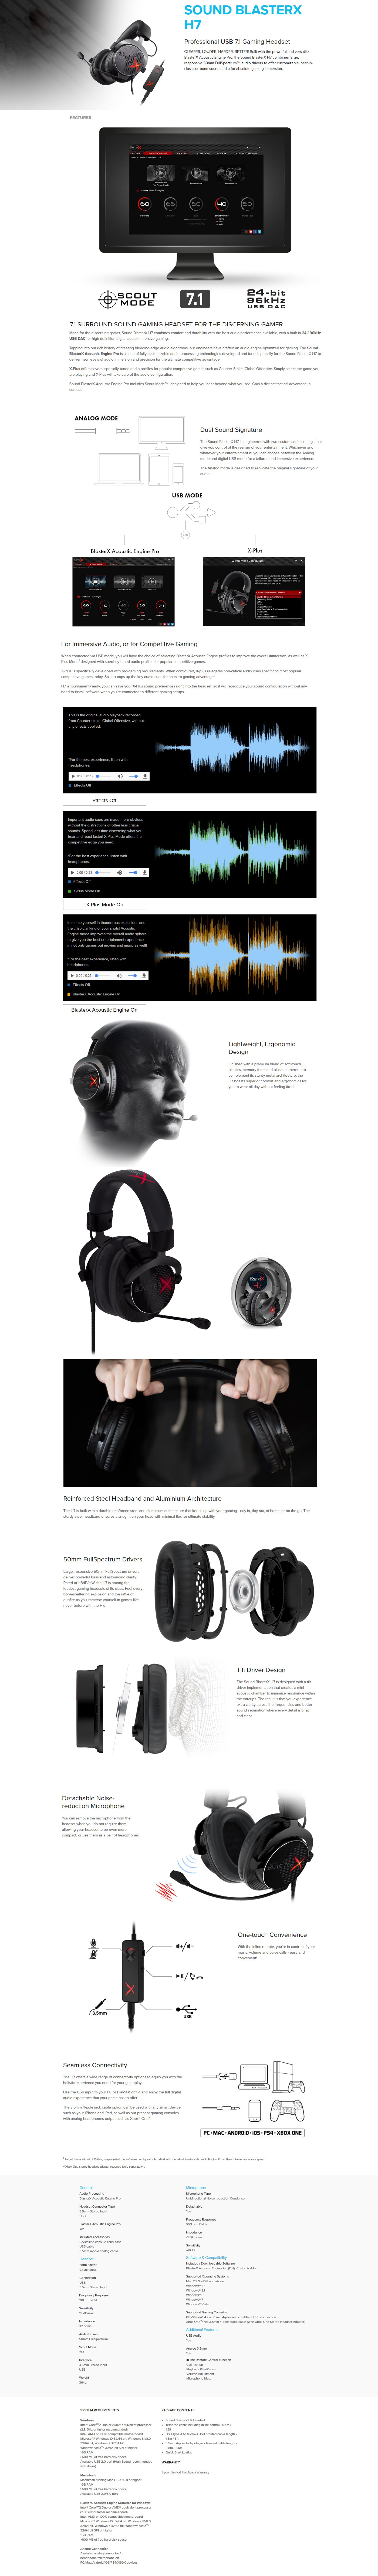 Creative Sound BlasterX H7 Professional USB Gaming Headset